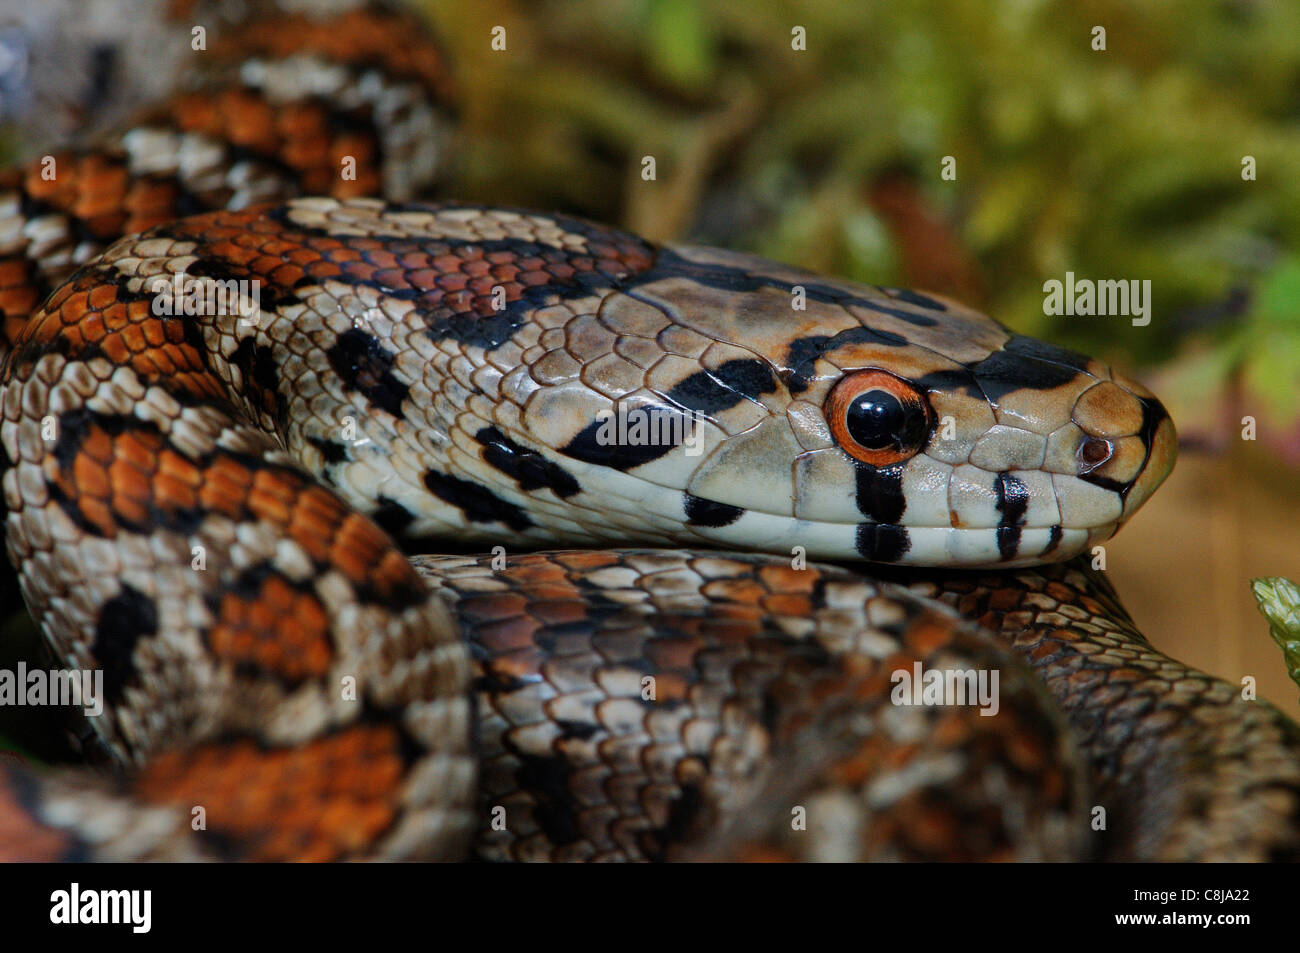 Snake, snakes, Leopard snake, Zamenis situla, trinket snake, reptile, reptiles, portrait, protected, endangered, Greece, Greek, Stock Photo